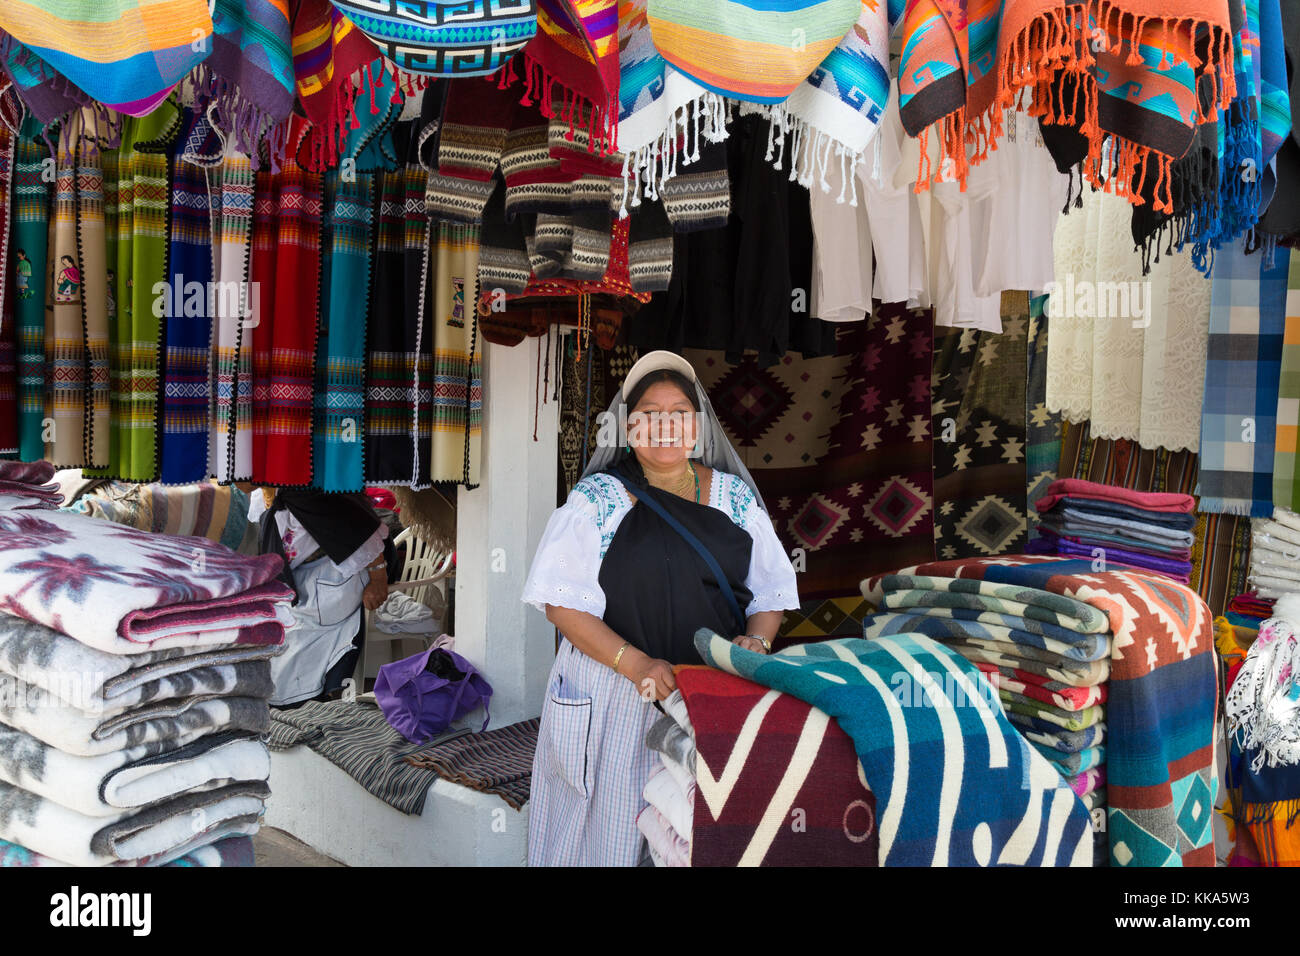 A happy smiling vendor and her clothes market stall, Otavalo market, Ecuador latin America Stock Photo